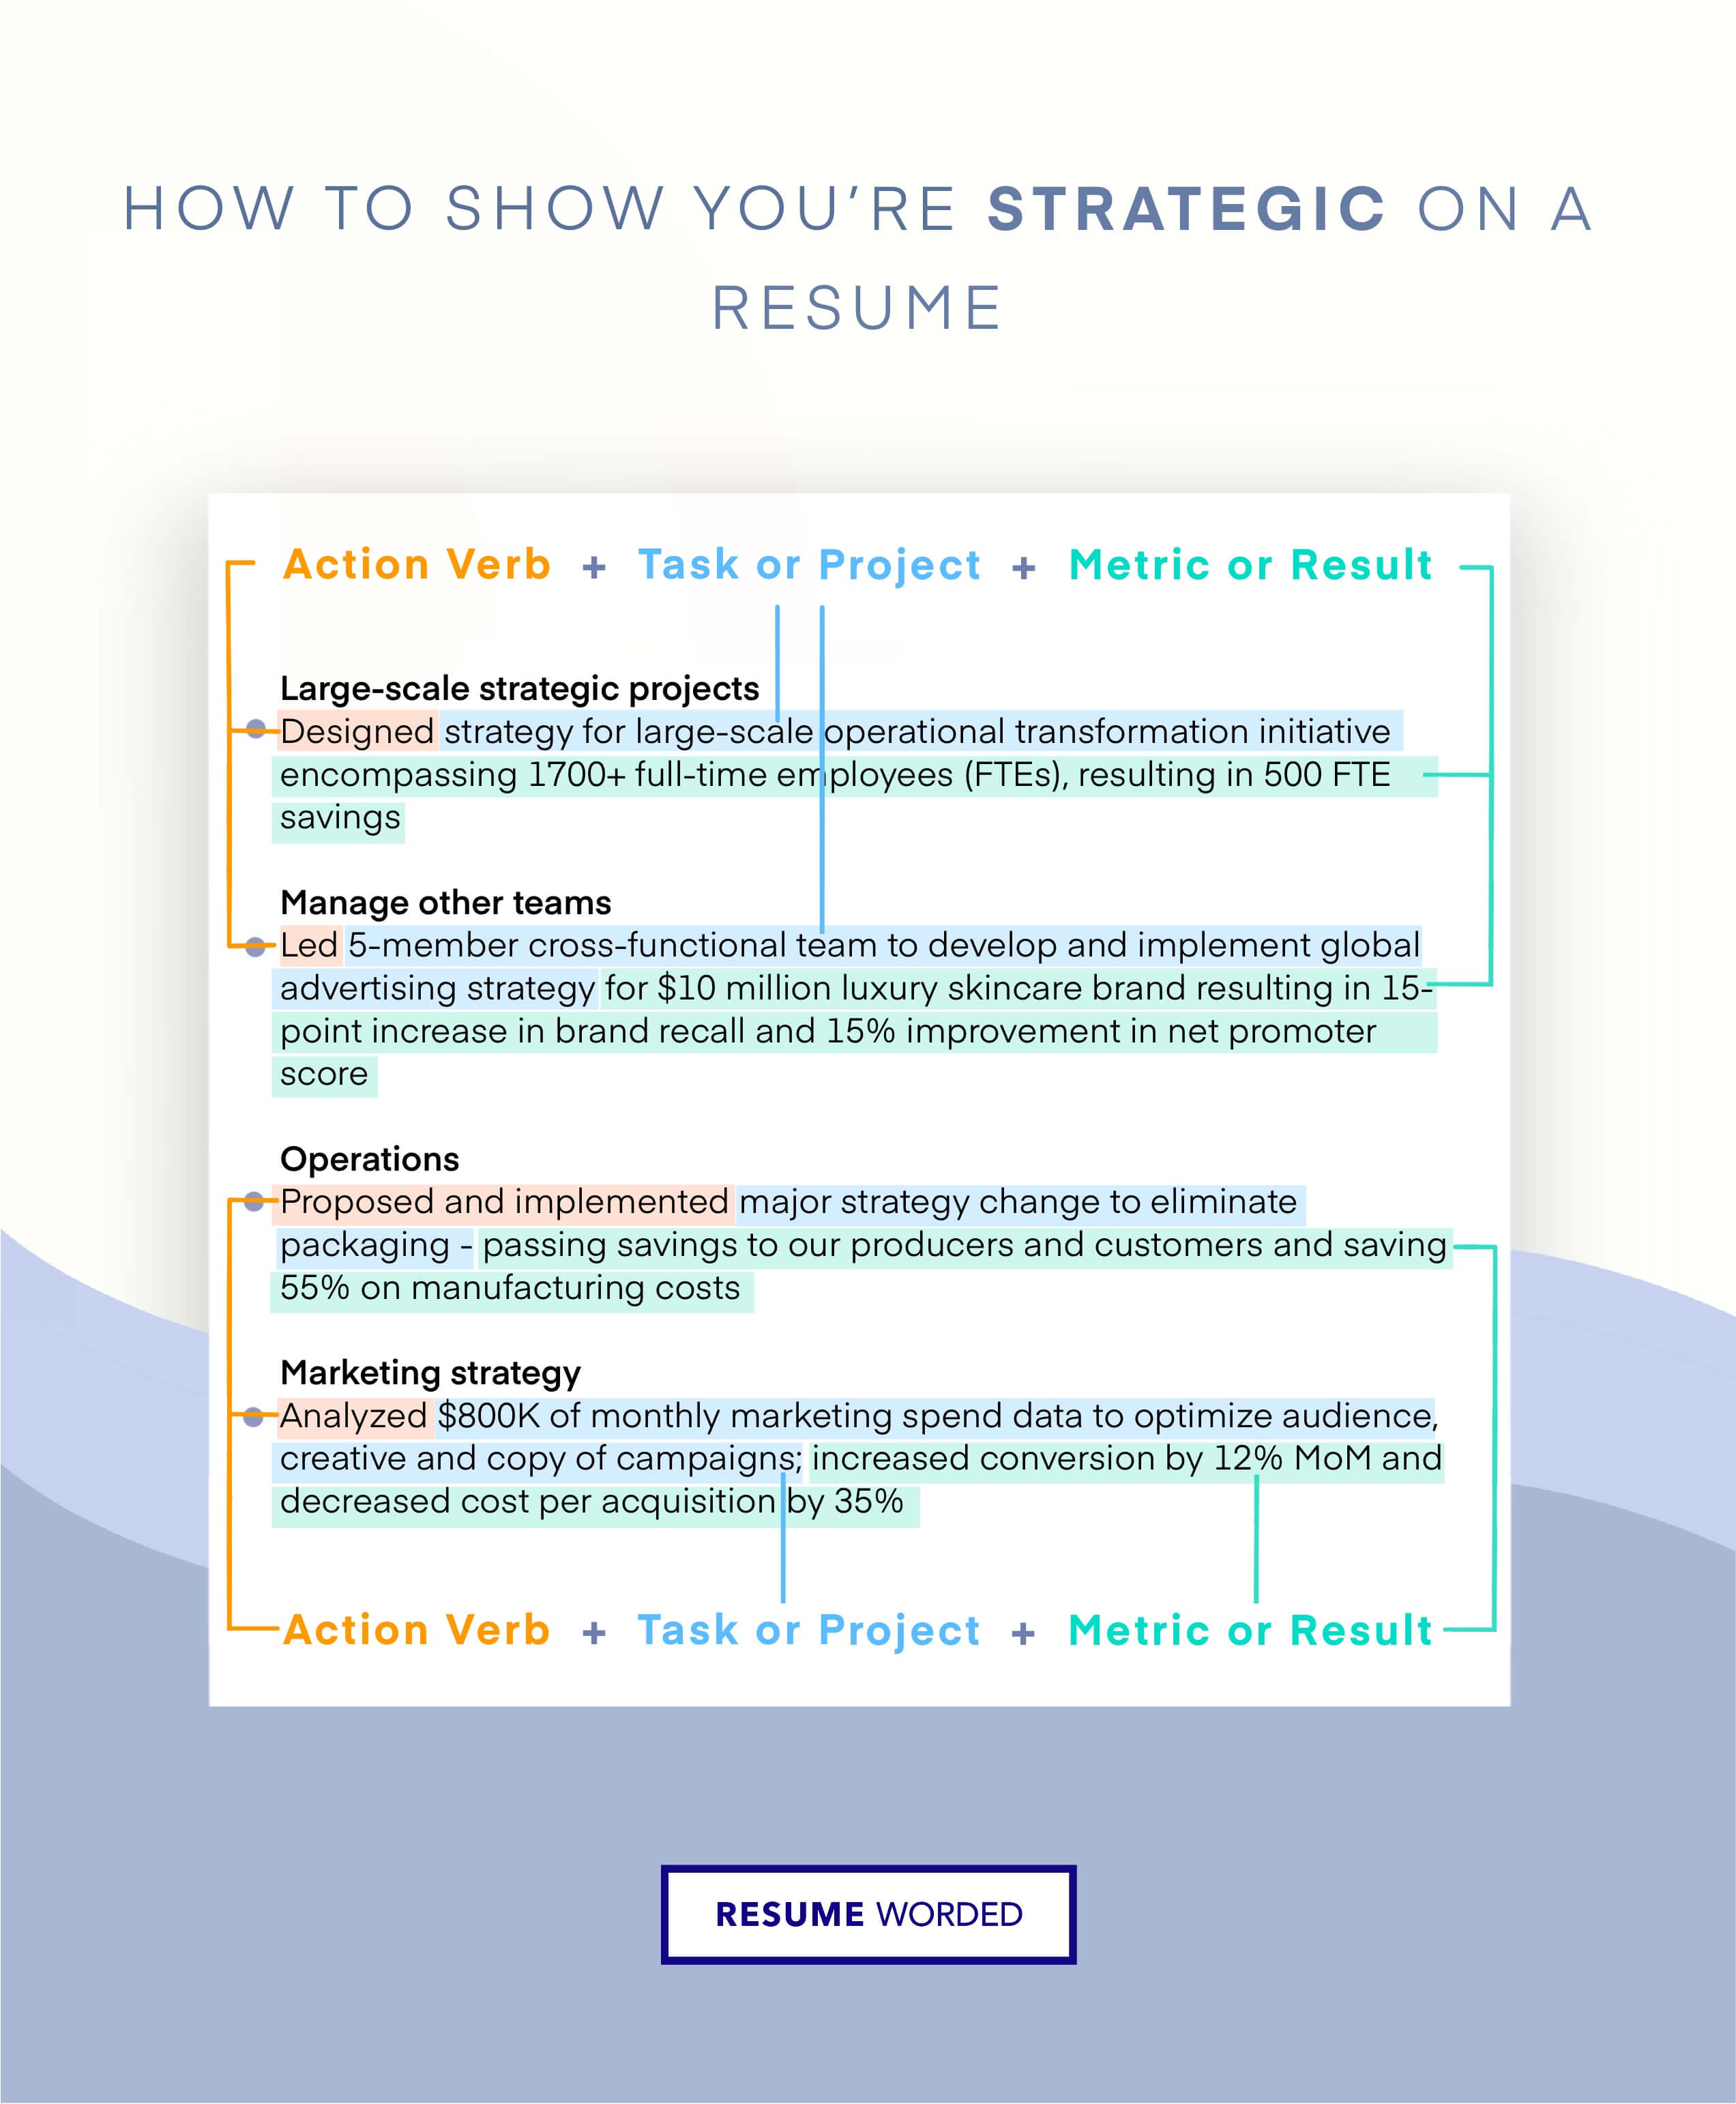 Demonstrate leadership and strategic thinking - Senior System Administrator CV